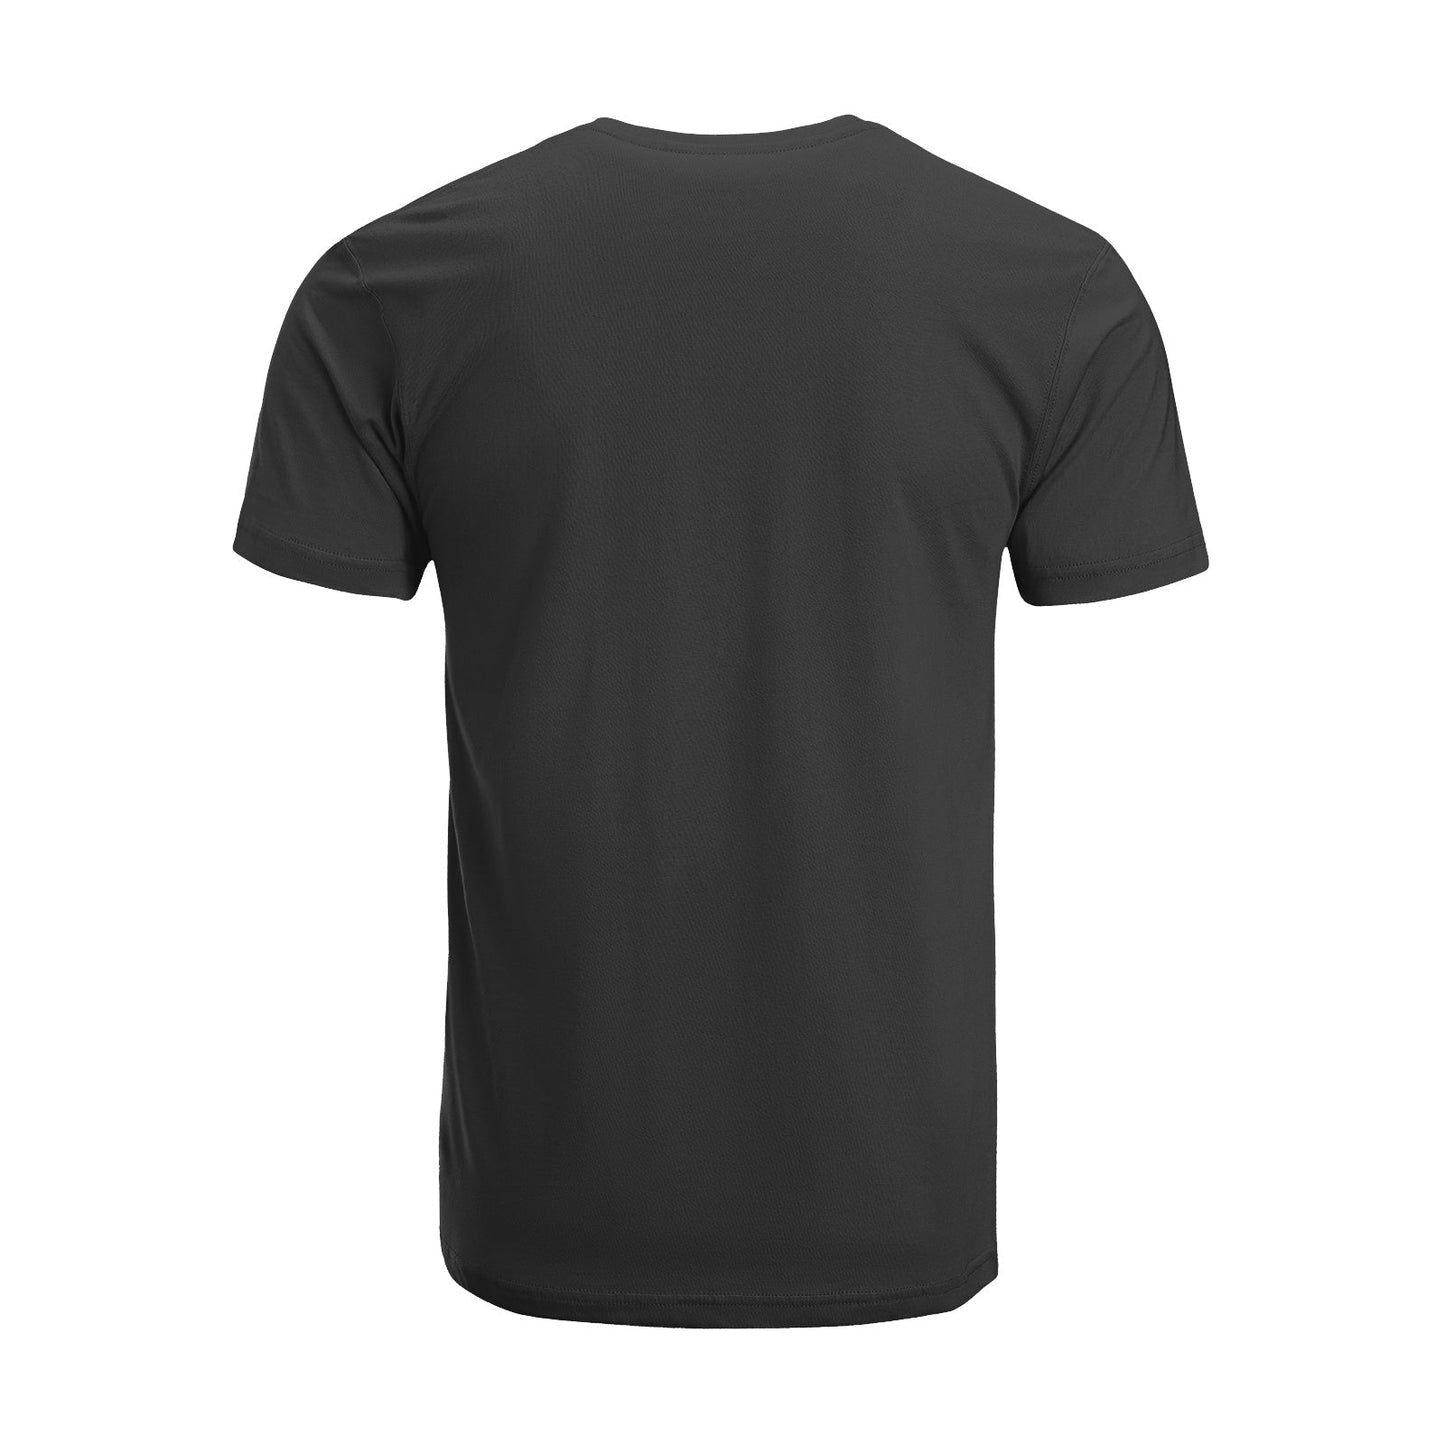 Unisex Short Sleeve Crew Neck Cotton Jersey T-Shirt CAT 08 - Tara-Outfits.com